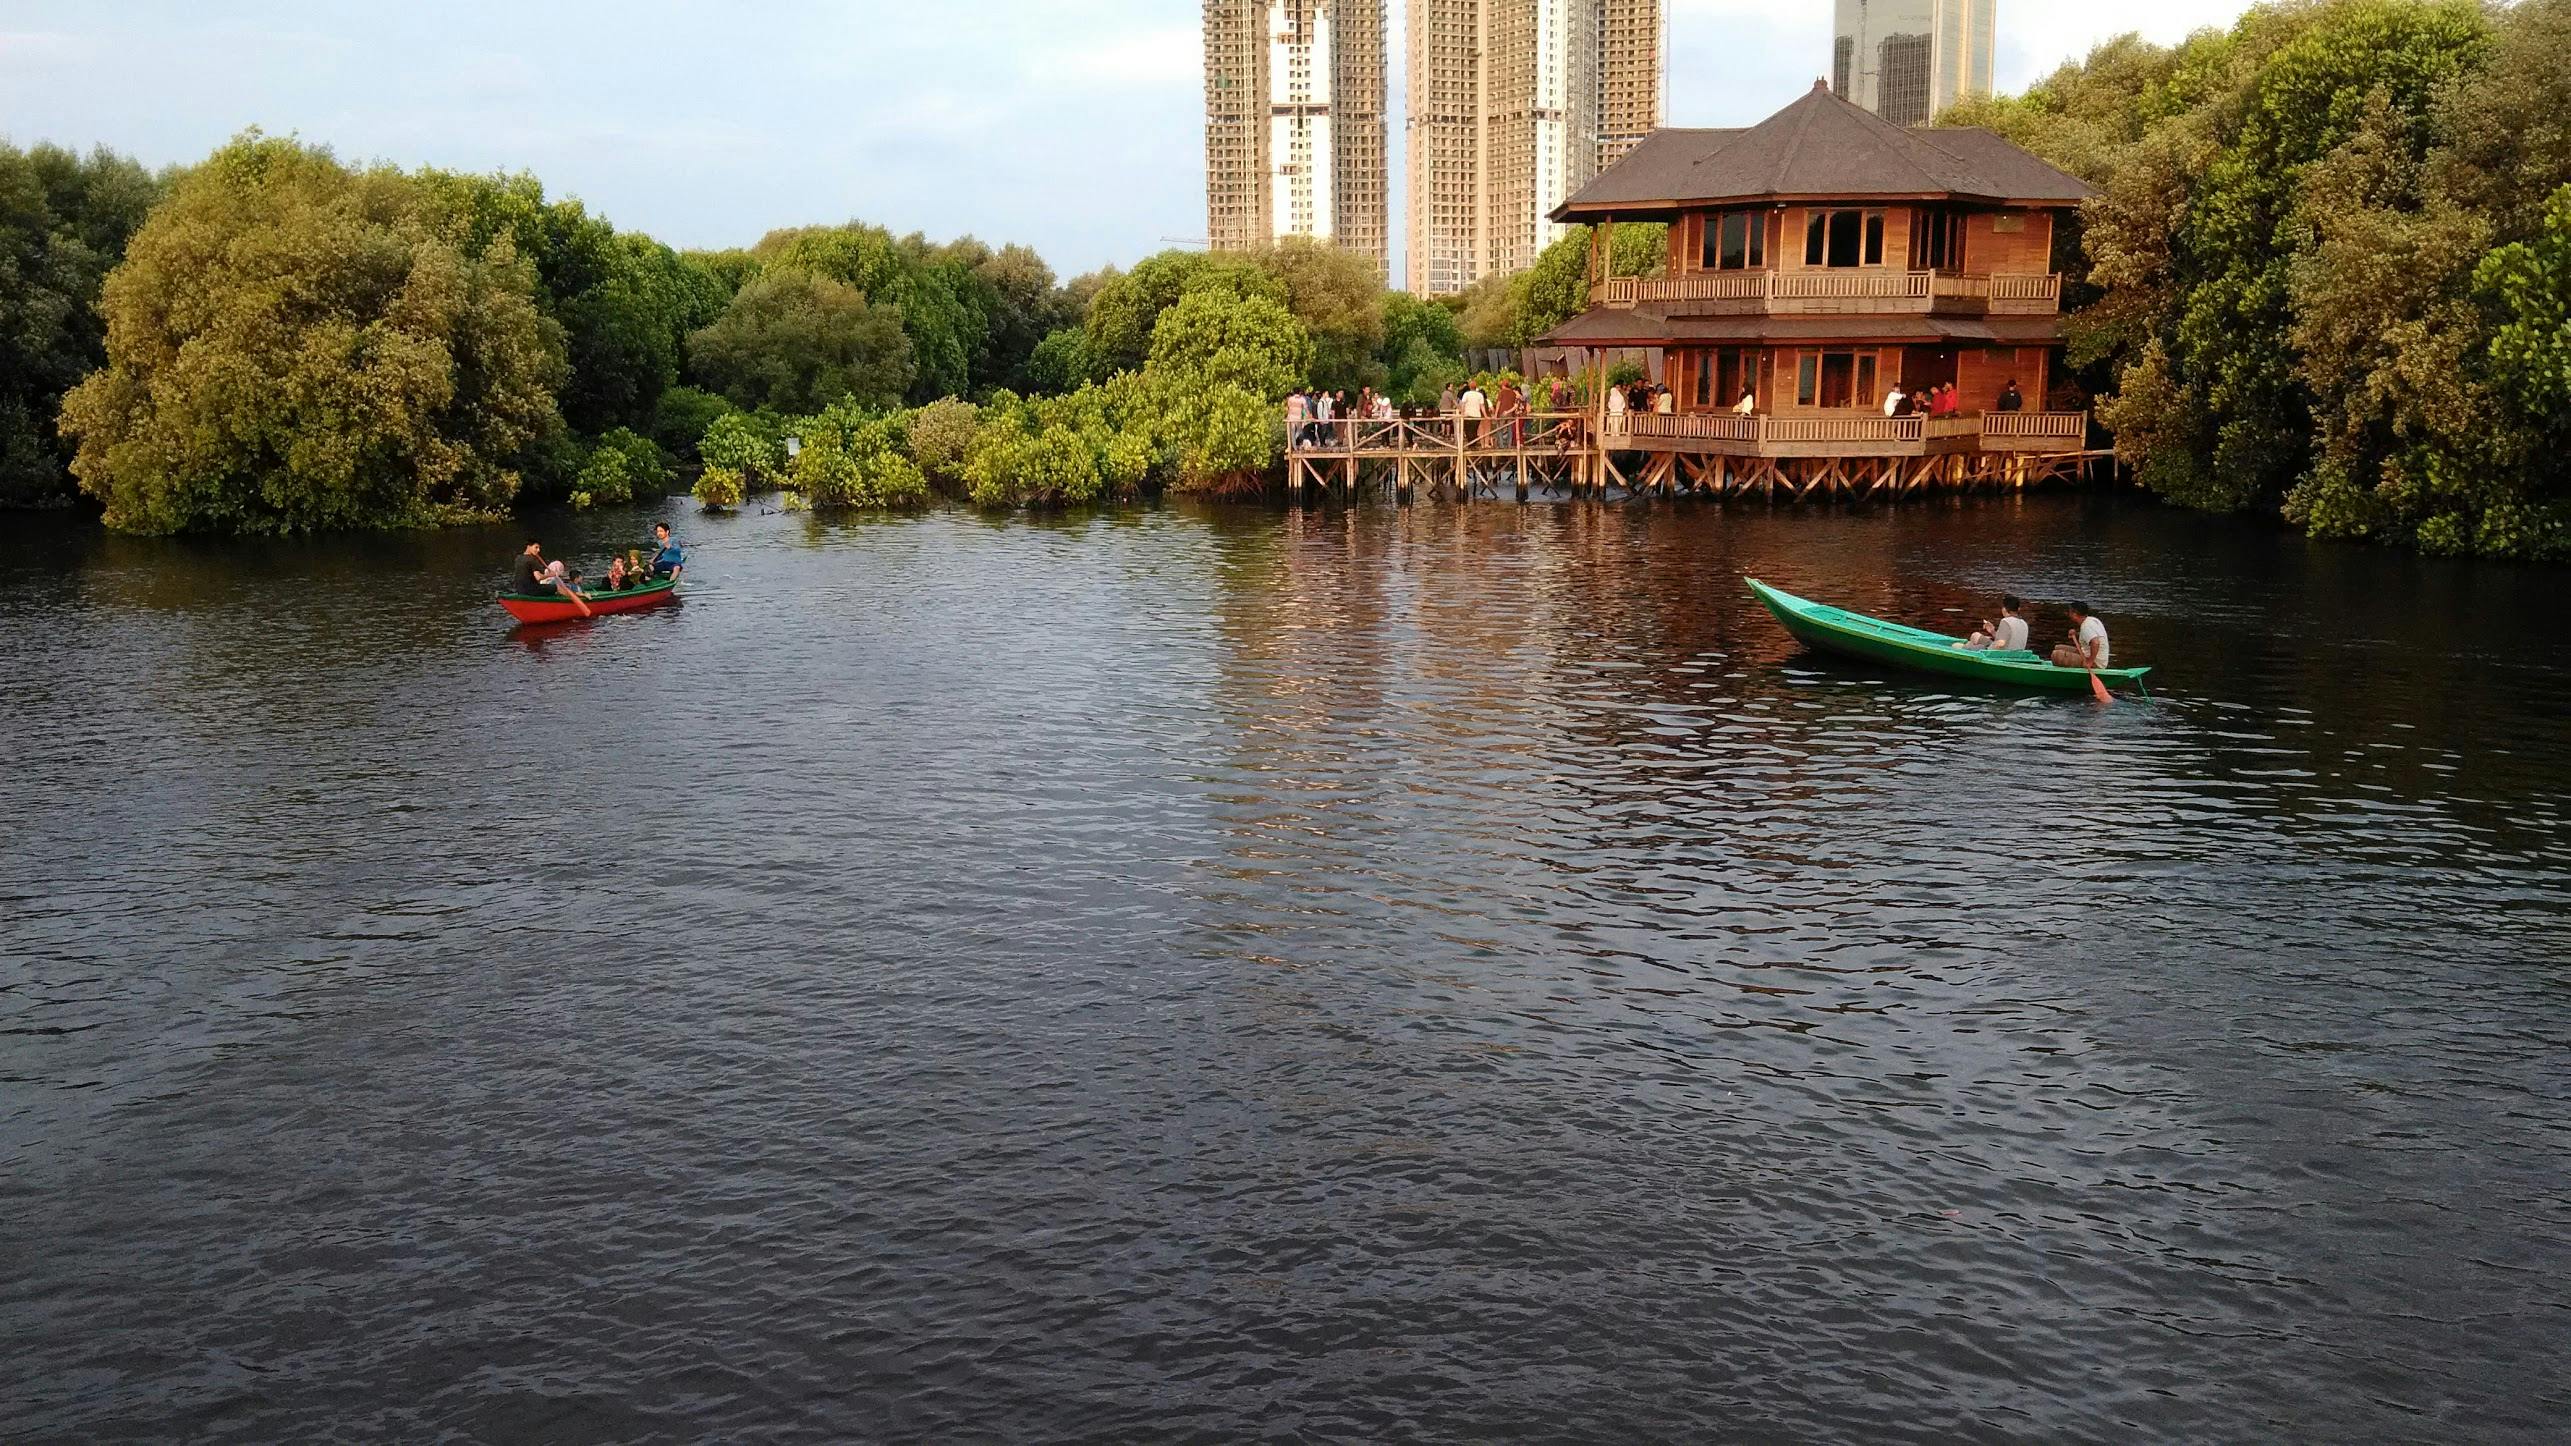 Free stock photo of #boat #swamp #house #vacation #holiday #jakarta